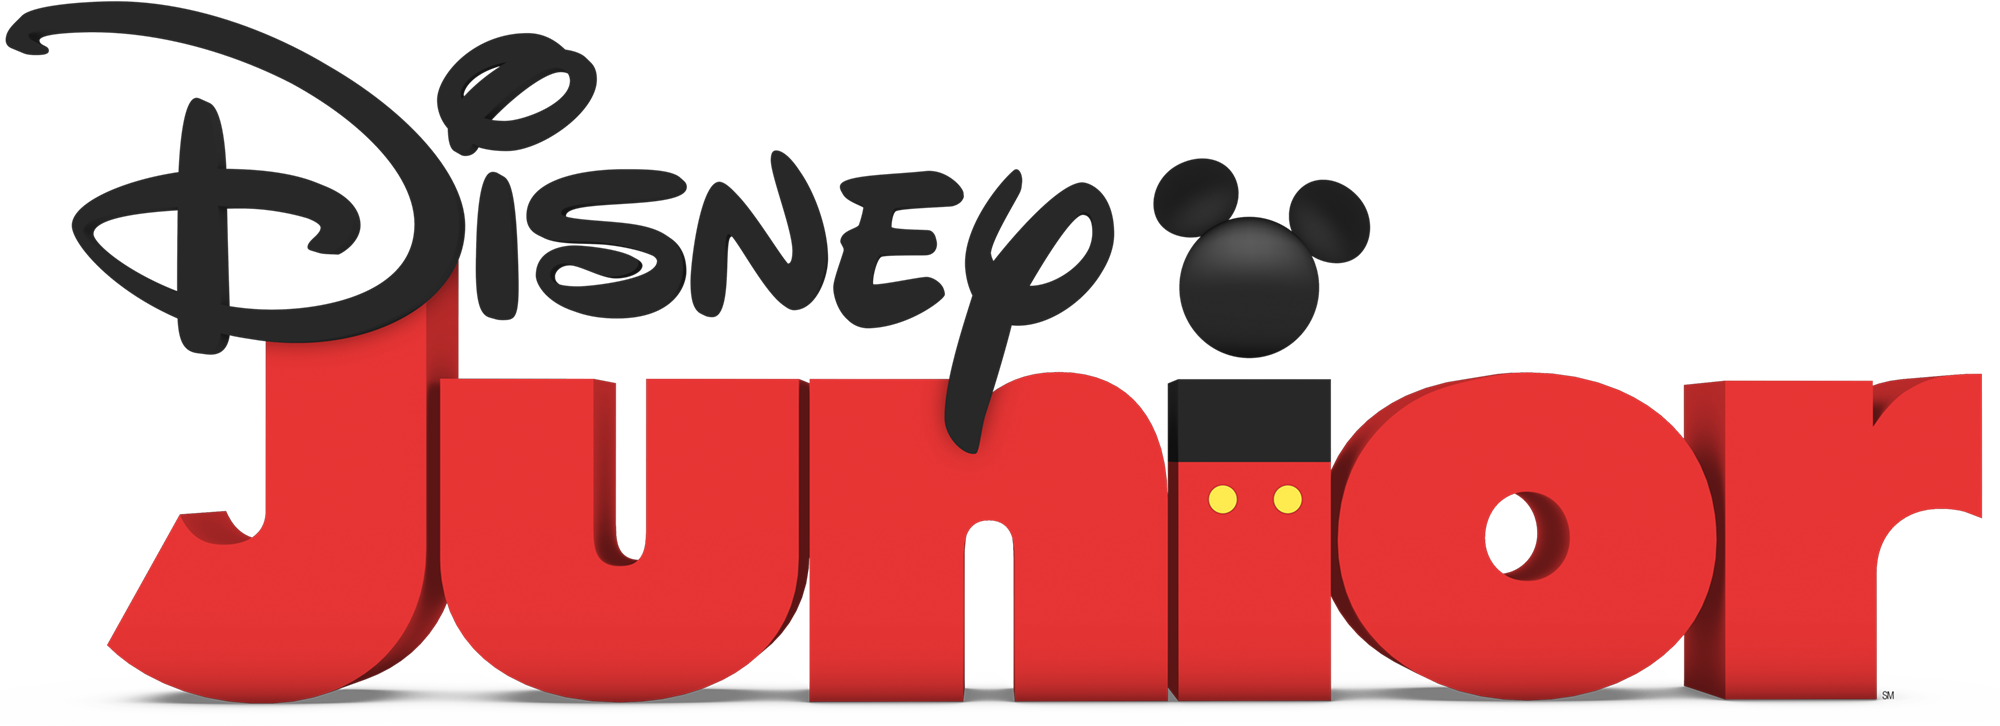 Disney Junior - company